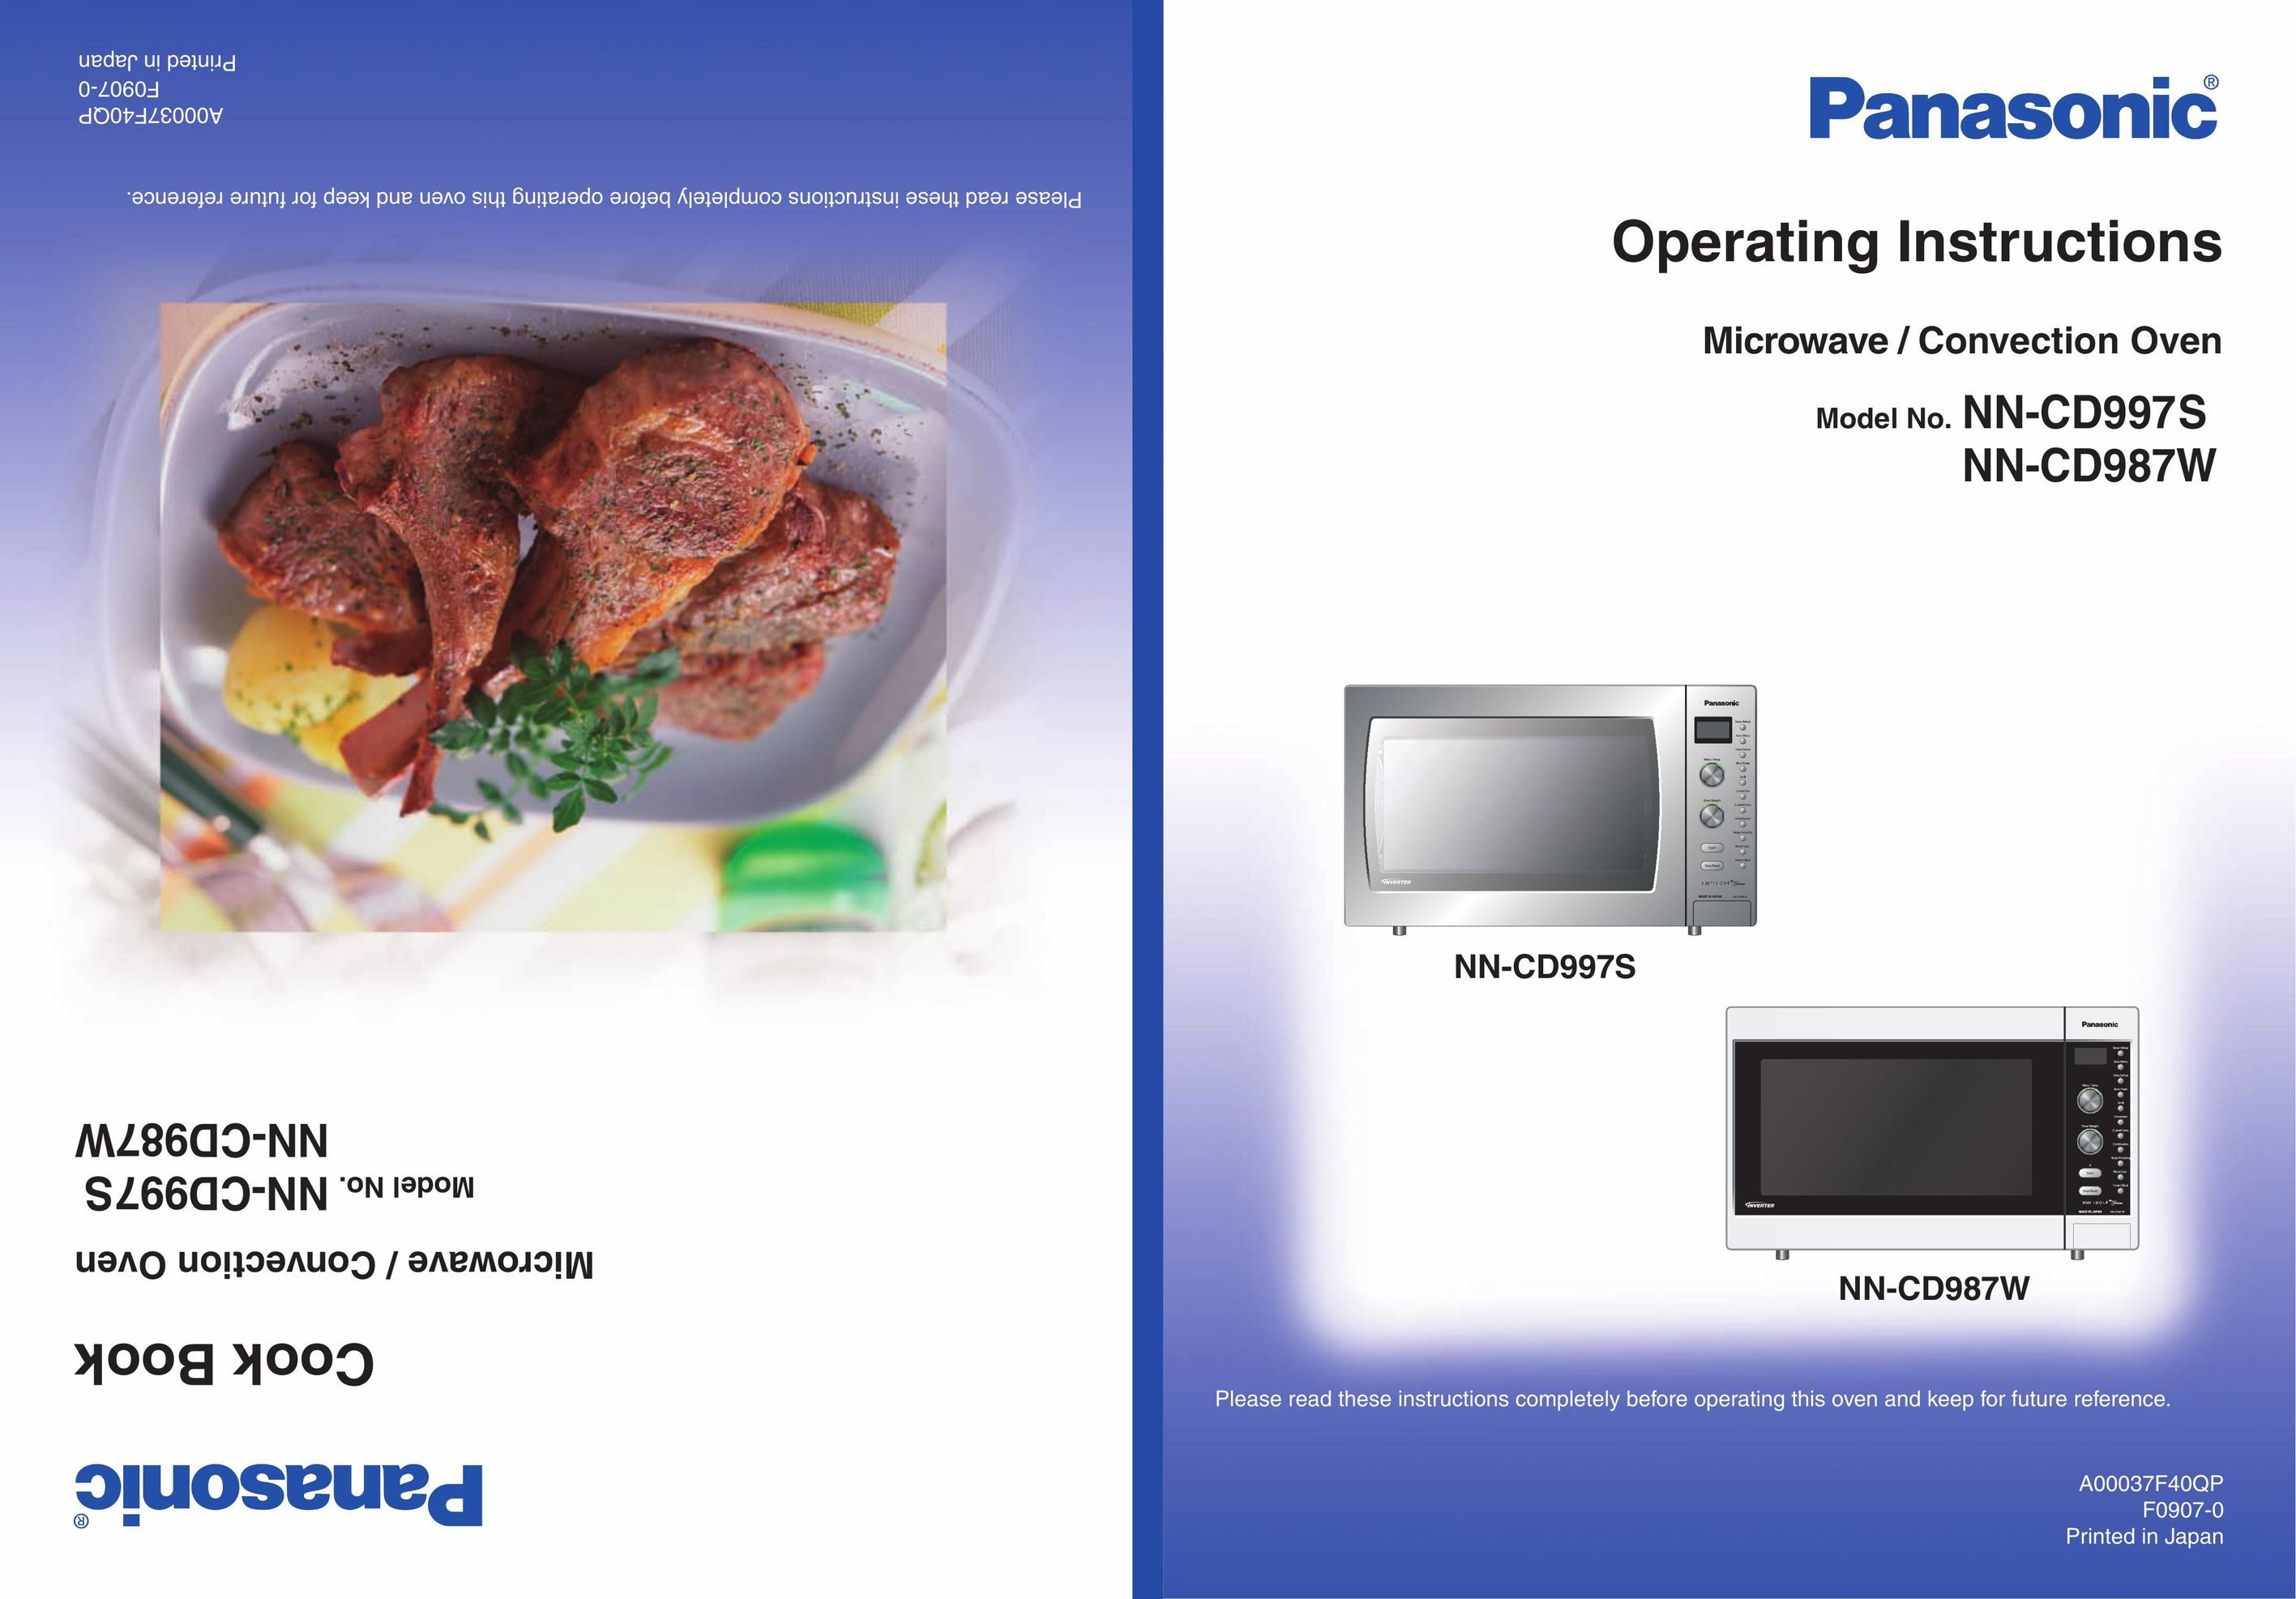 Panasonic NN-CD997S Convection Oven User Manual